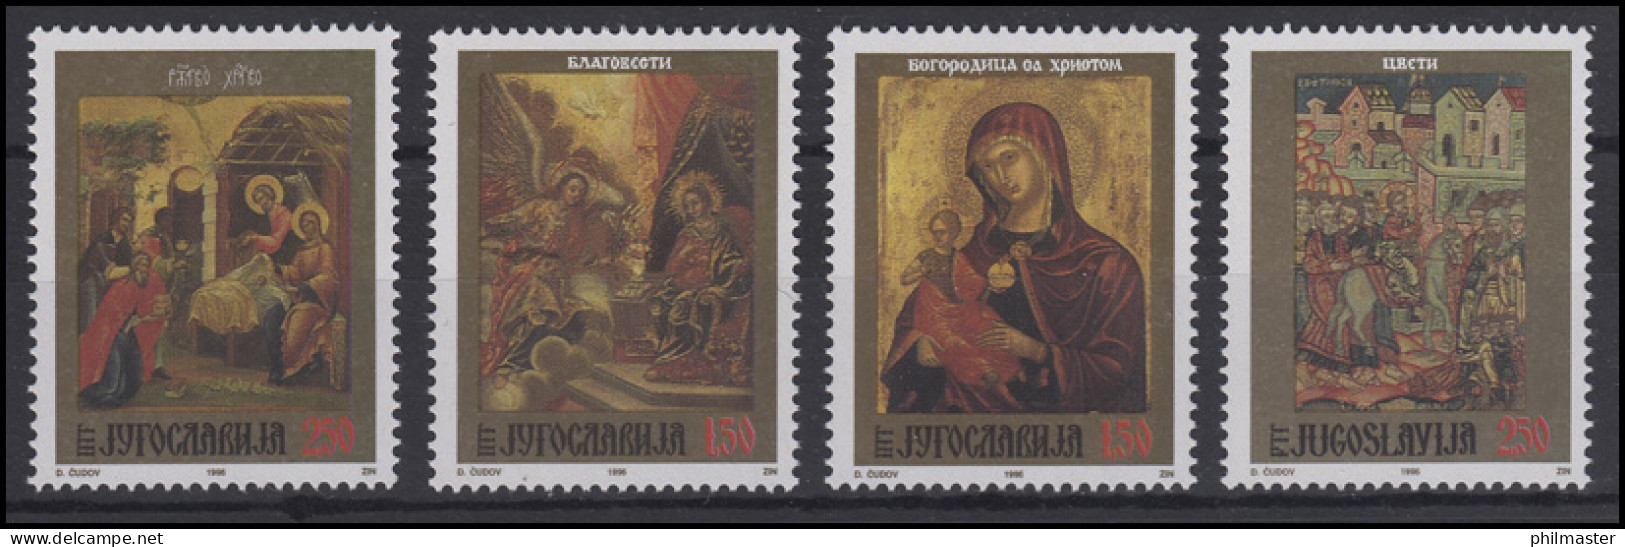 Jugoslawien: Fresken & Wandmalereien - Heilige 1996, 4 Werte, Satz **  - Christianisme